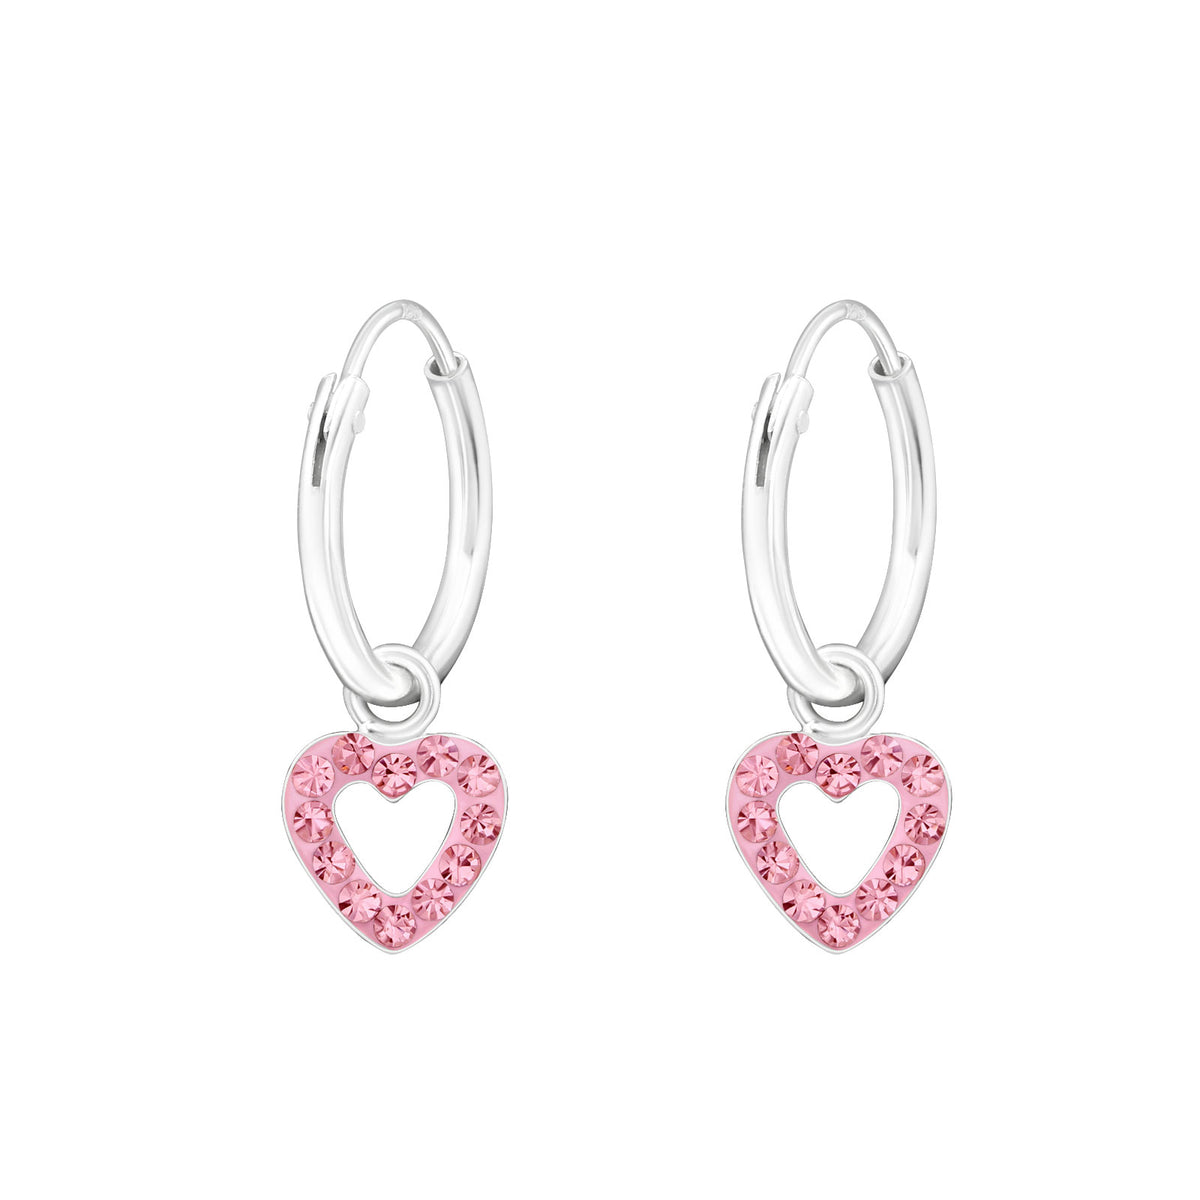 Kinder Mädchen Creolen Ohrringe Herz pink Strass 925er Silber Kinderschmuck - Cristal-Jewelry